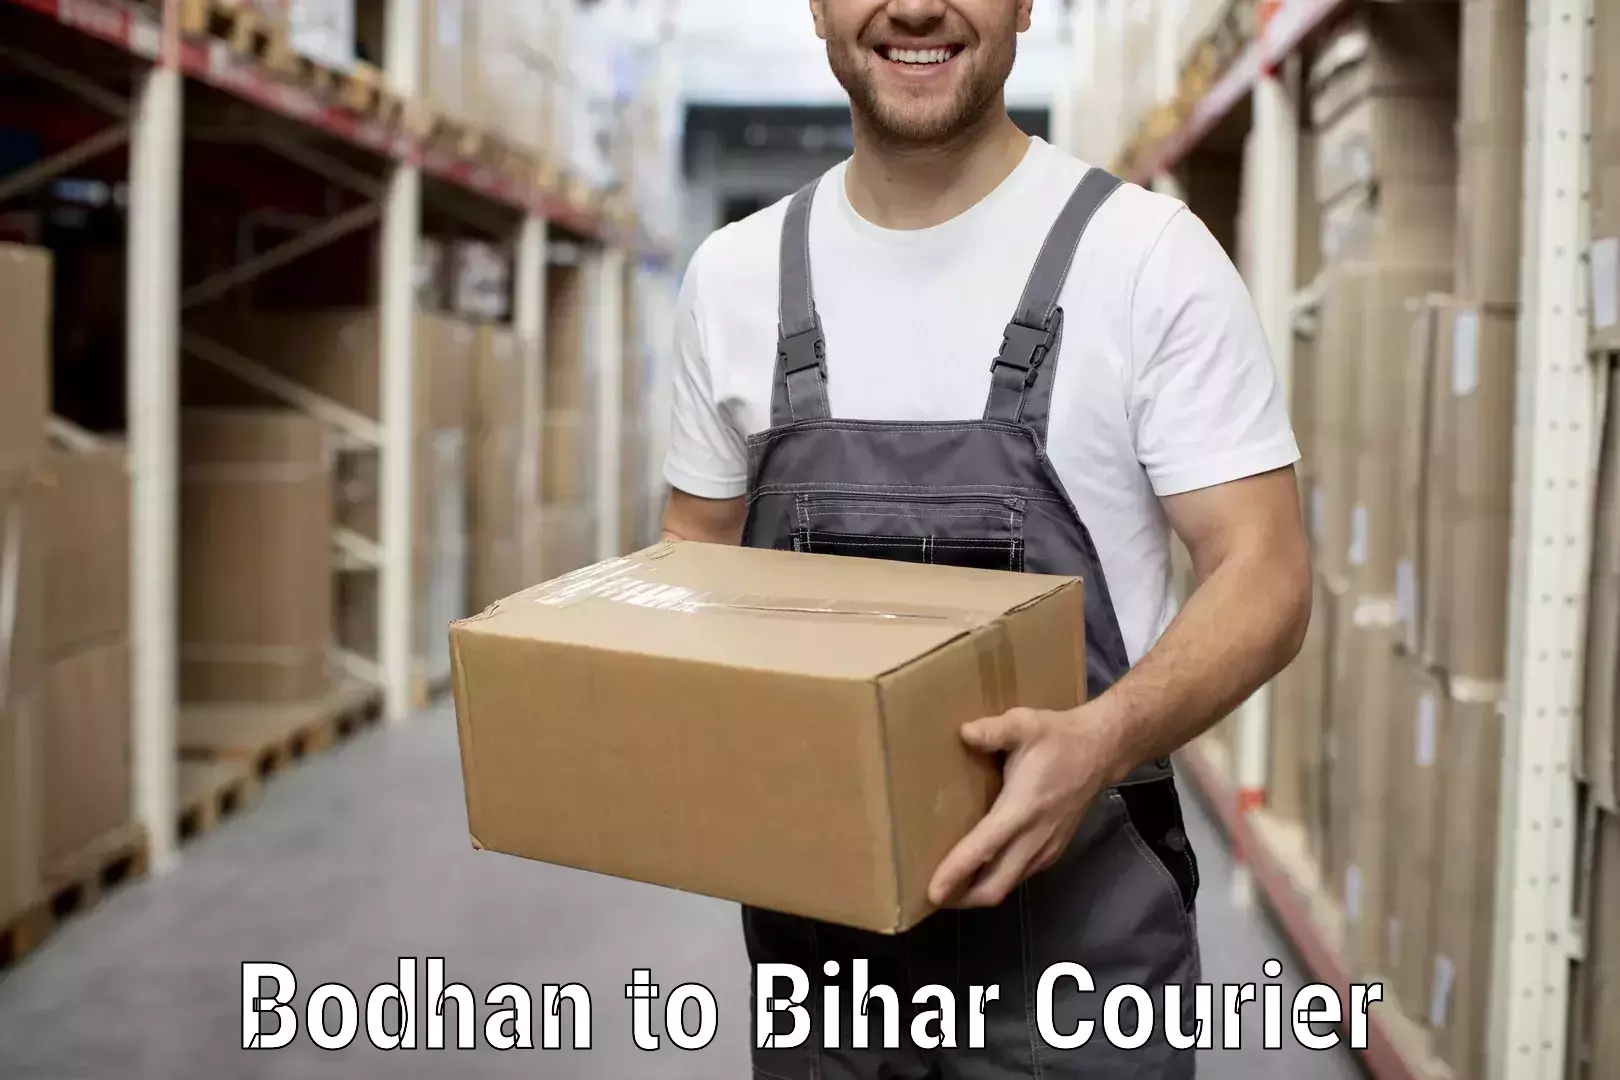 Specialized moving company Bodhan to Maranga